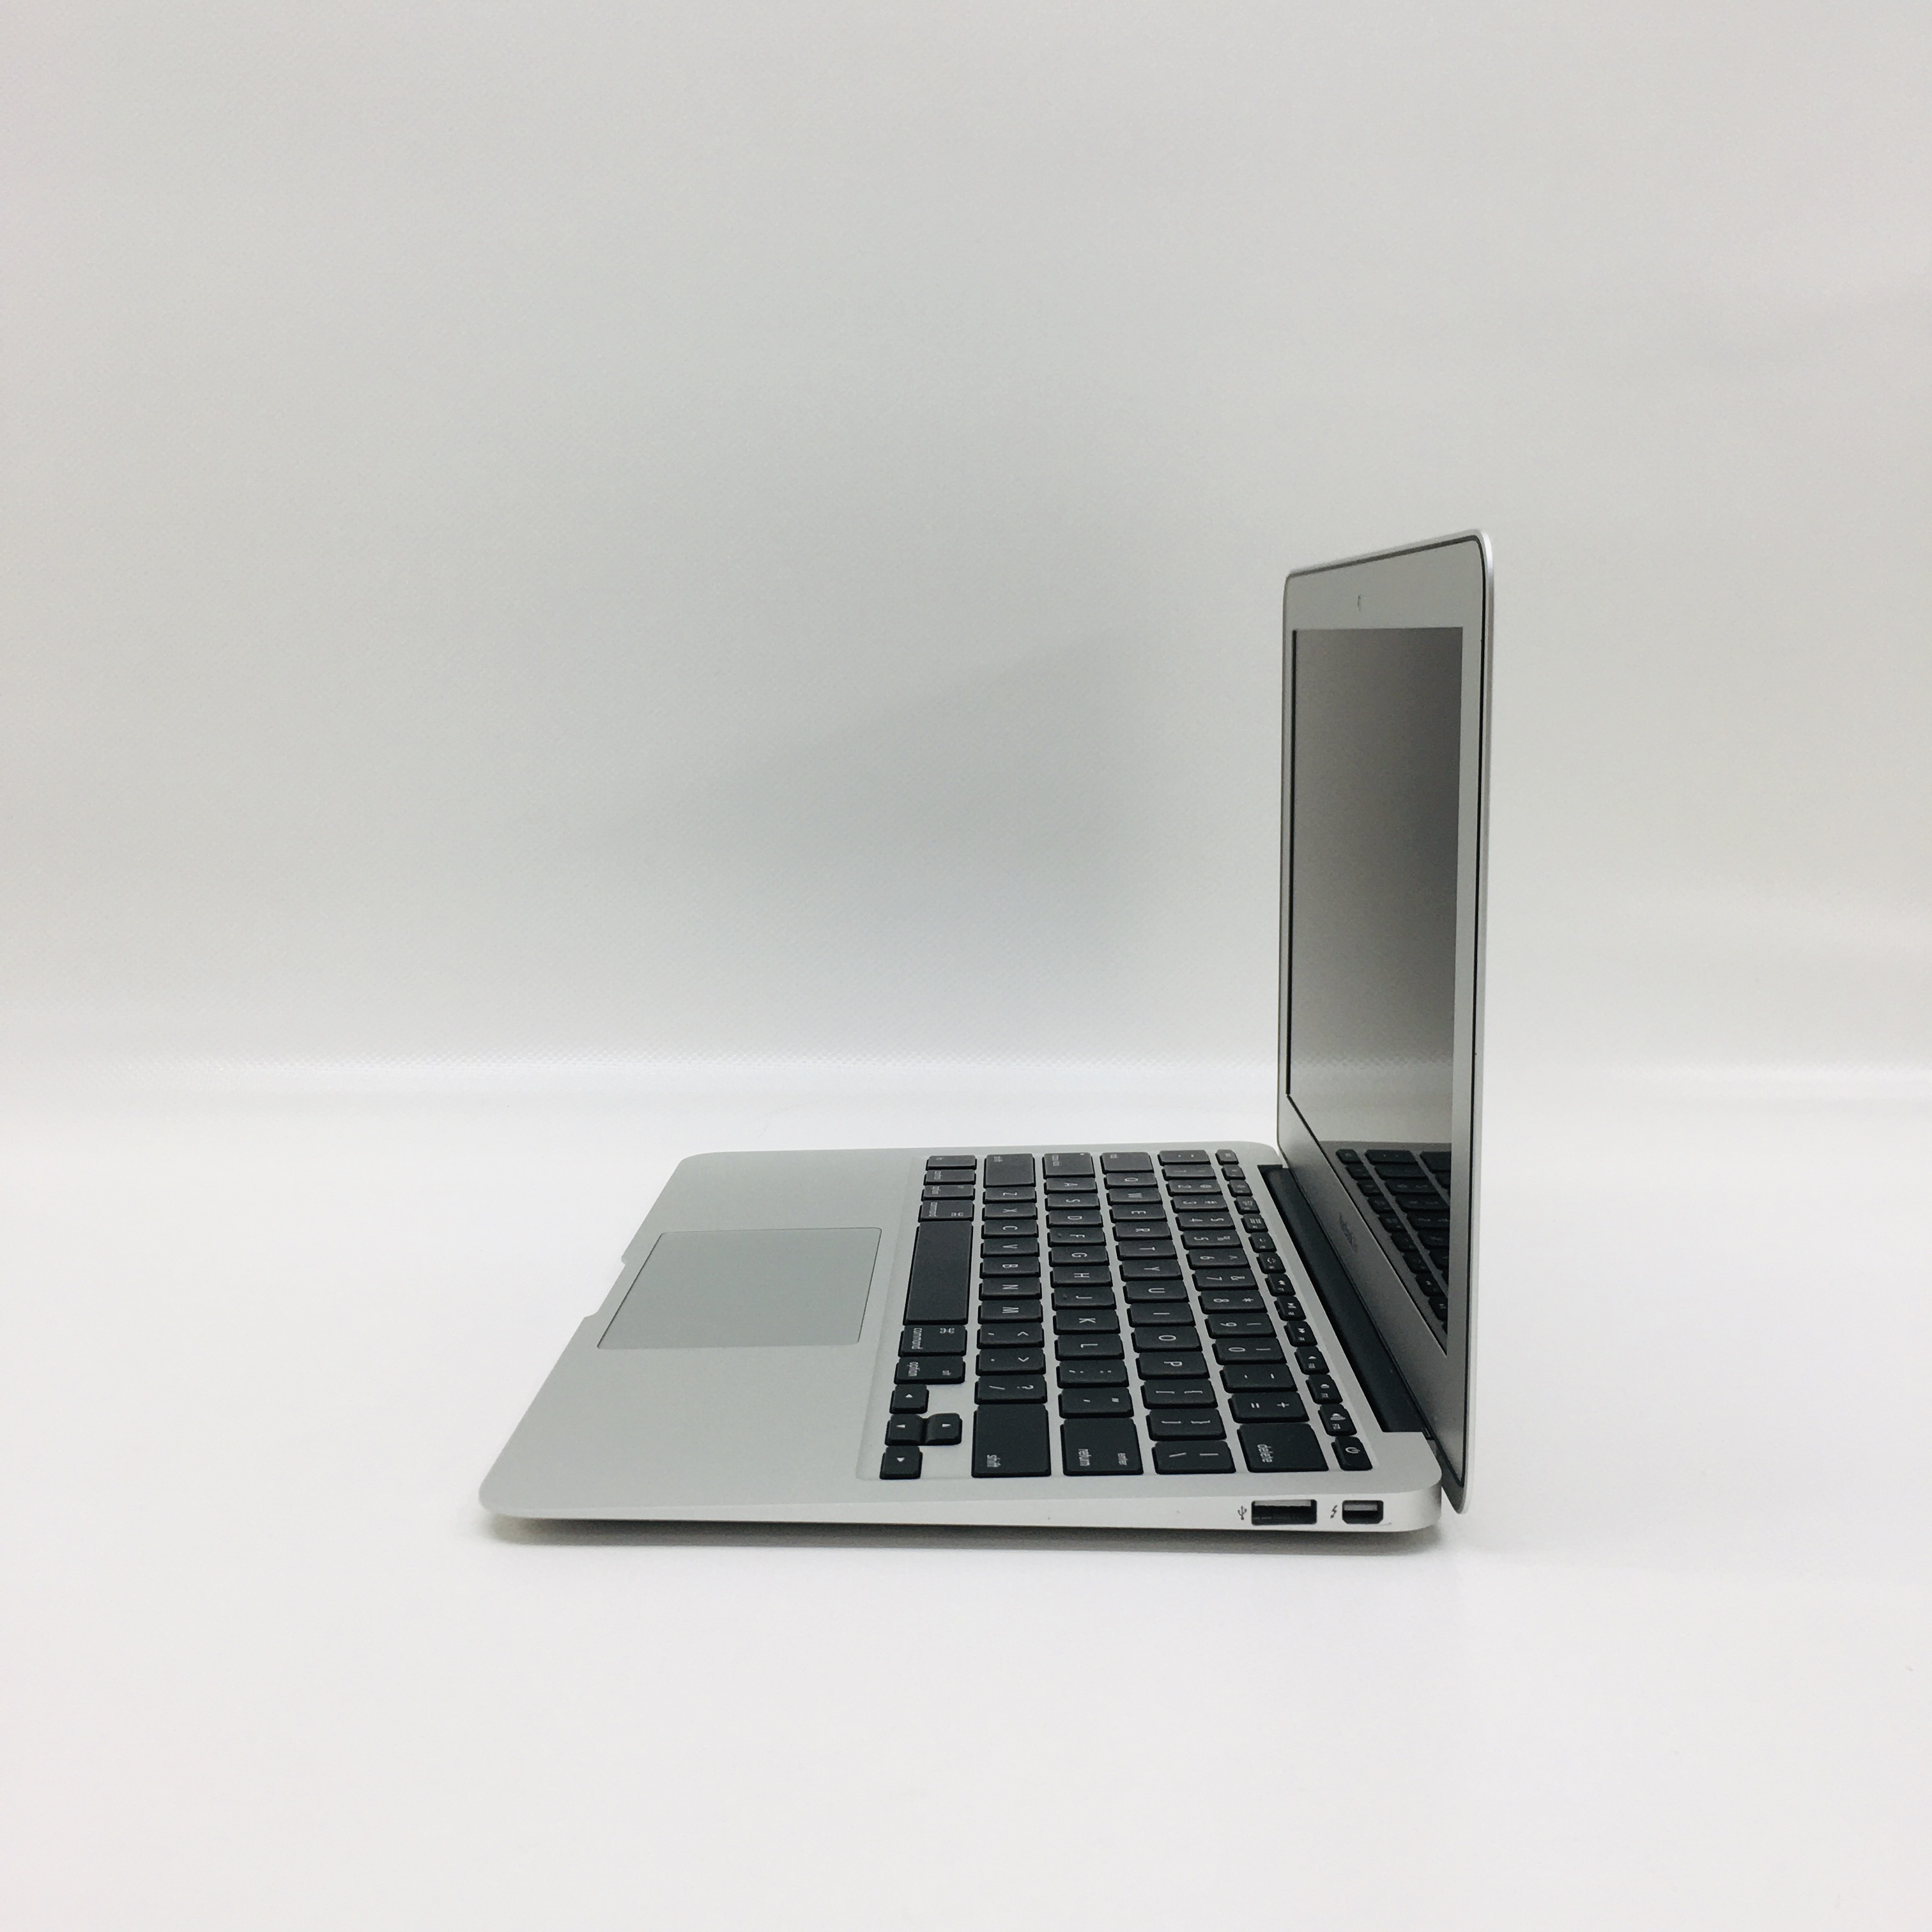 MacBook Air 11" Early 2015 (Intel Core i5 1.6 GHz 4 GB RAM 512 GB SSD), Intel Core i5 1.6 GHz, 4 GB RAM, 512 GB SSD, image 4